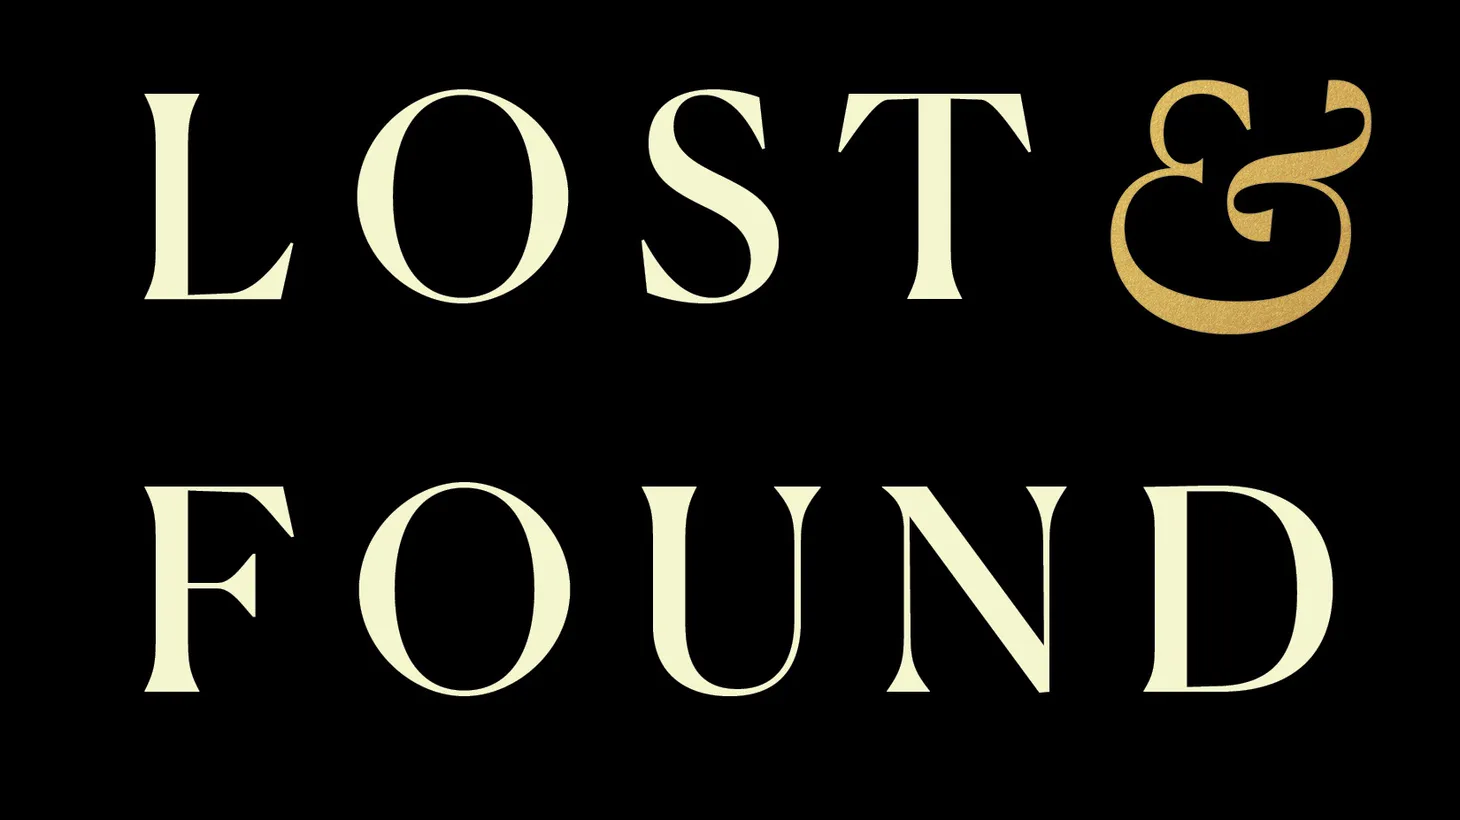 Kathryn Schulz’s new book is “Lost & Found.”